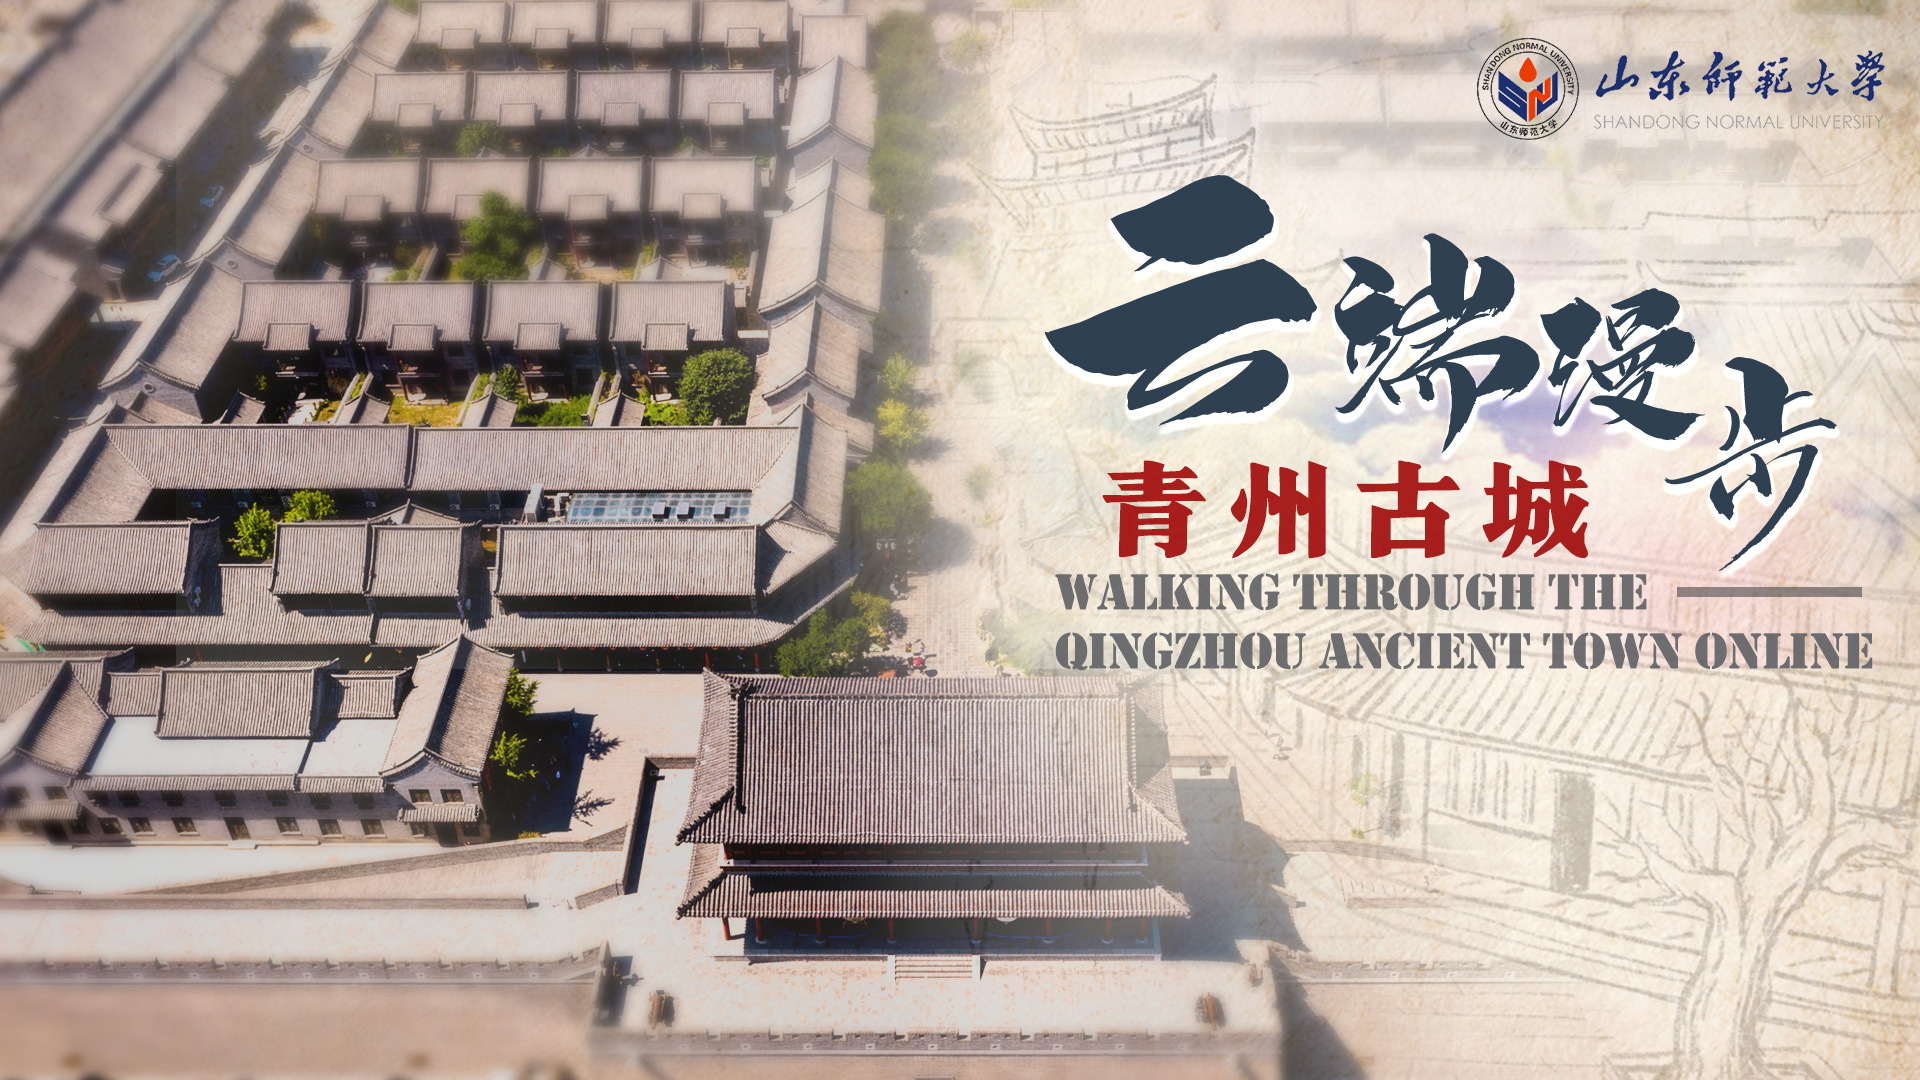 Walking through the Qingzhou ancient town online